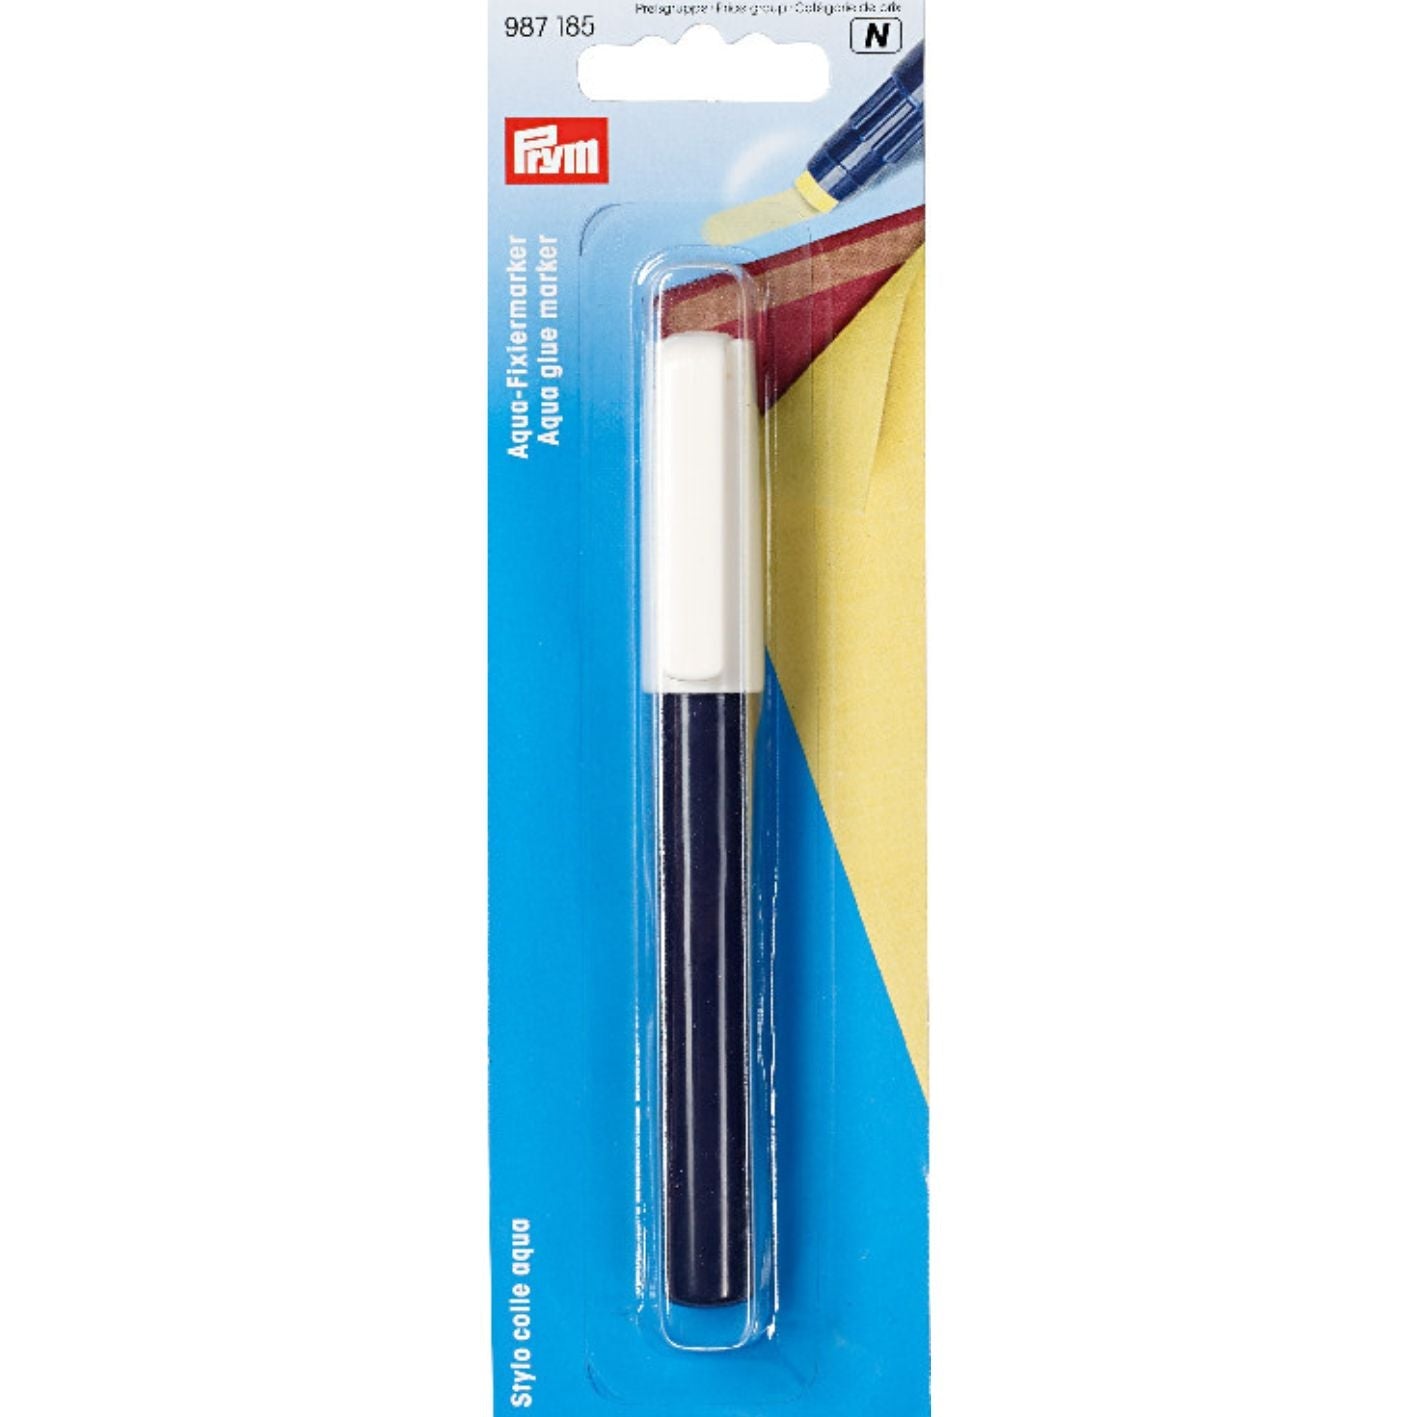 Prym Aqua glue pen AND refil bundle